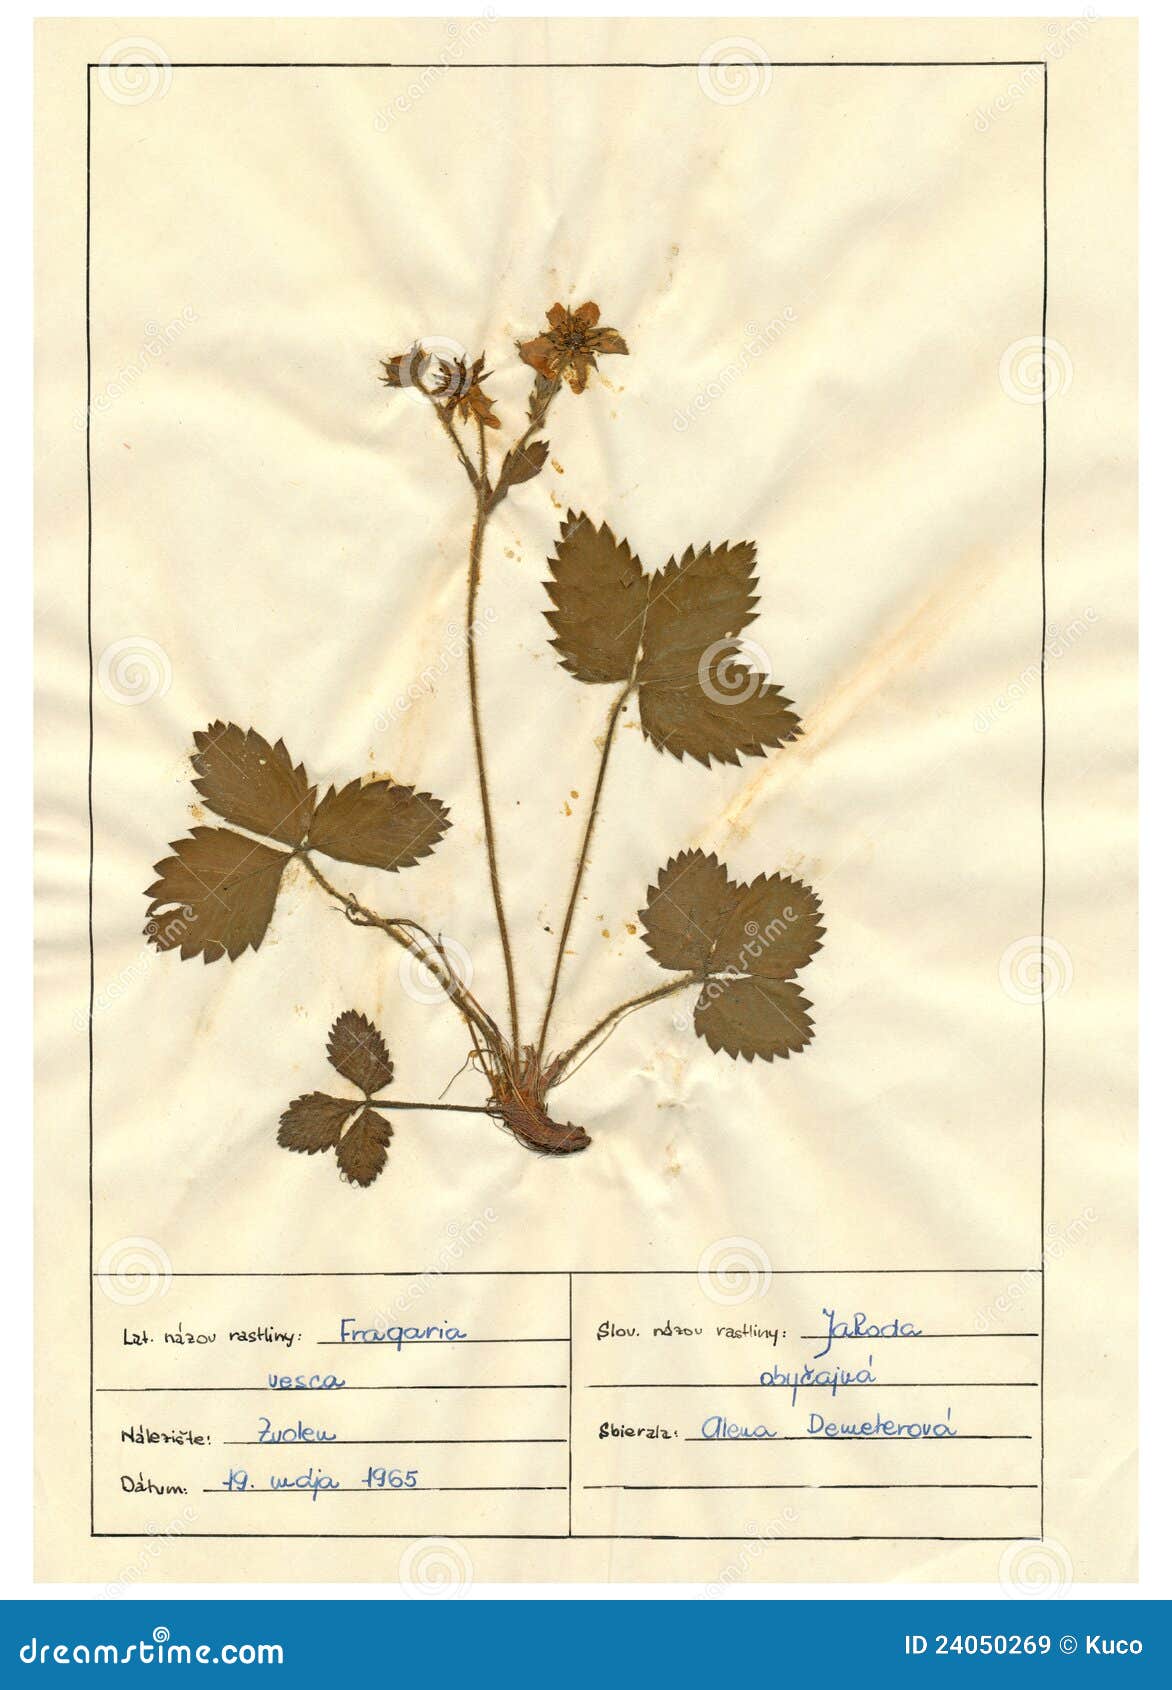 herbarium sheet - 6/30